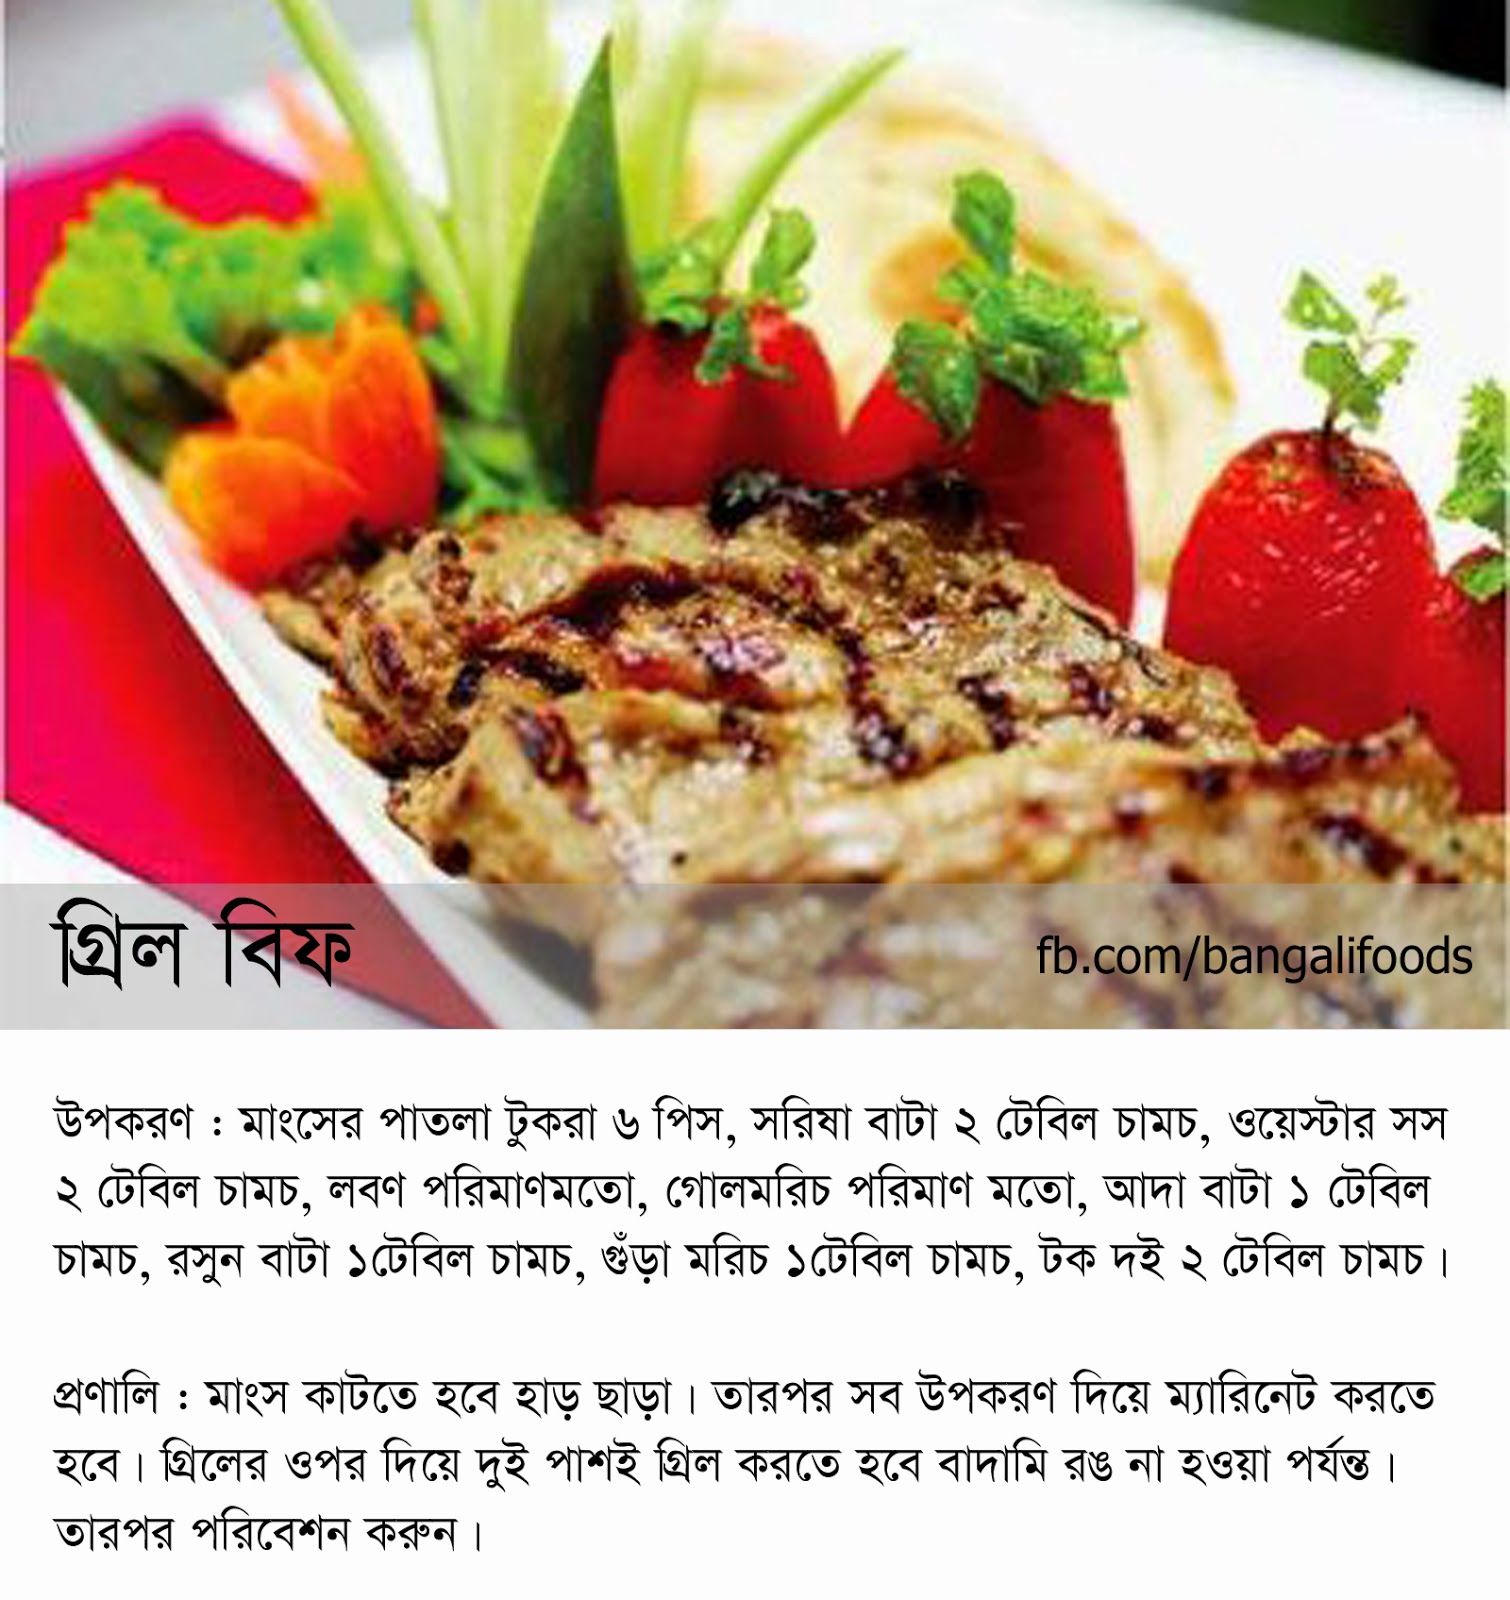 Bangali Foods: Beef Recipe For The Eid-Ul Adha 2013